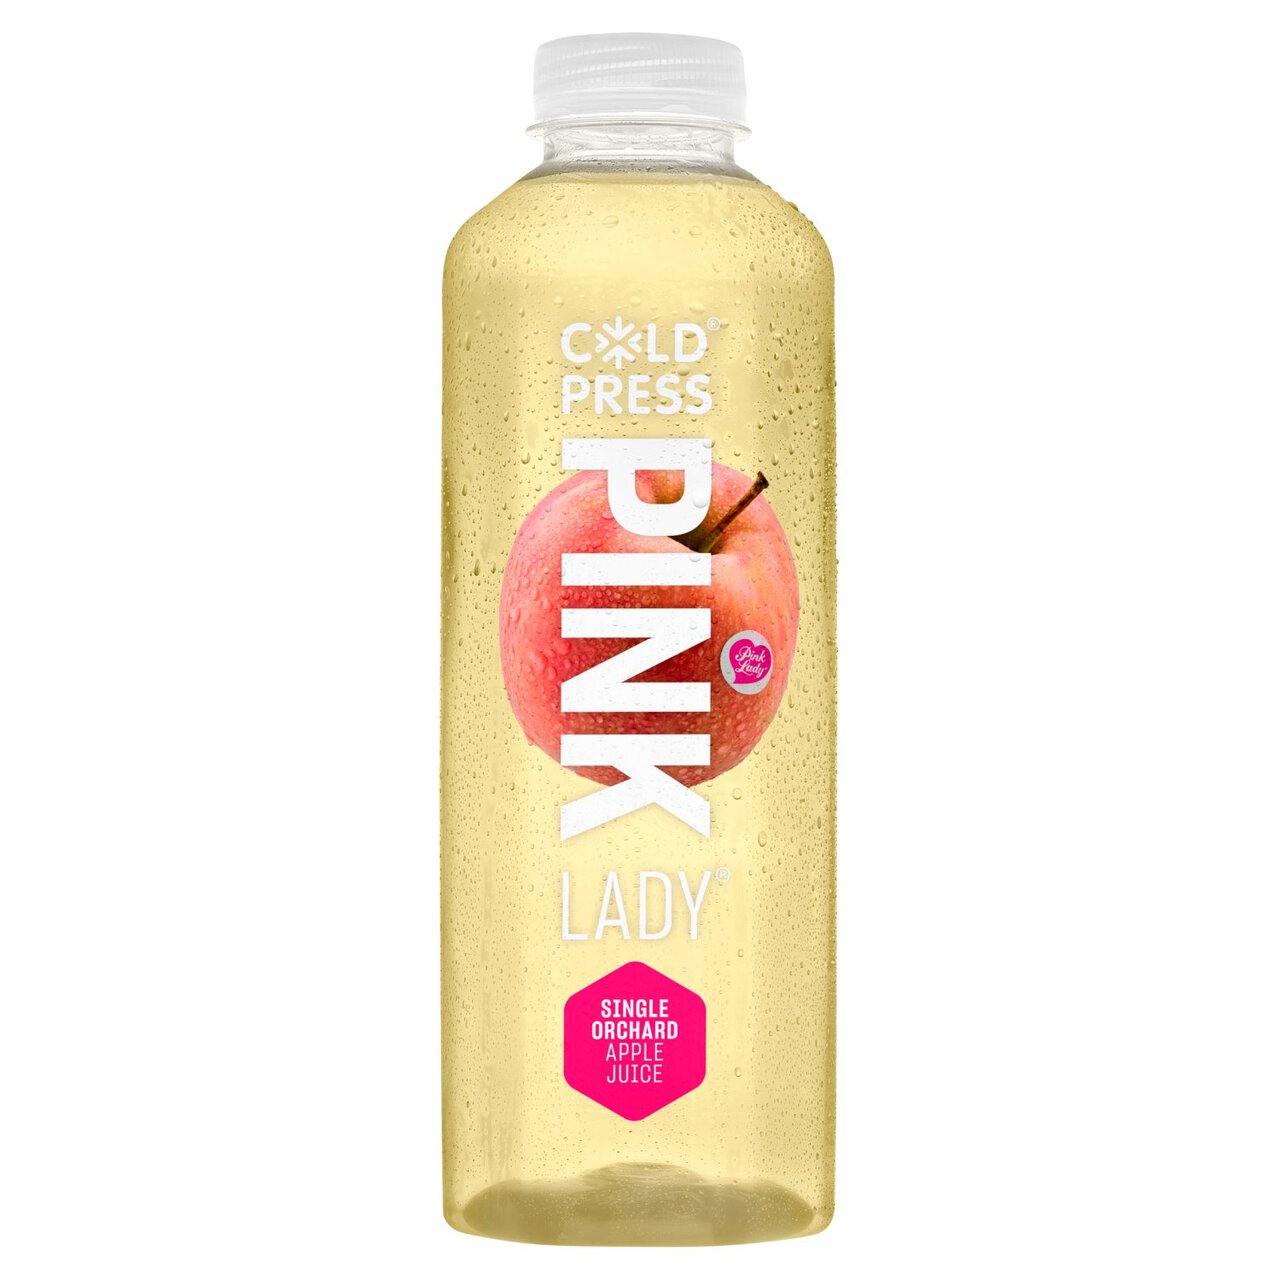 Coldpress Pink Lady Apple Juice Plus Vitamins 750ml